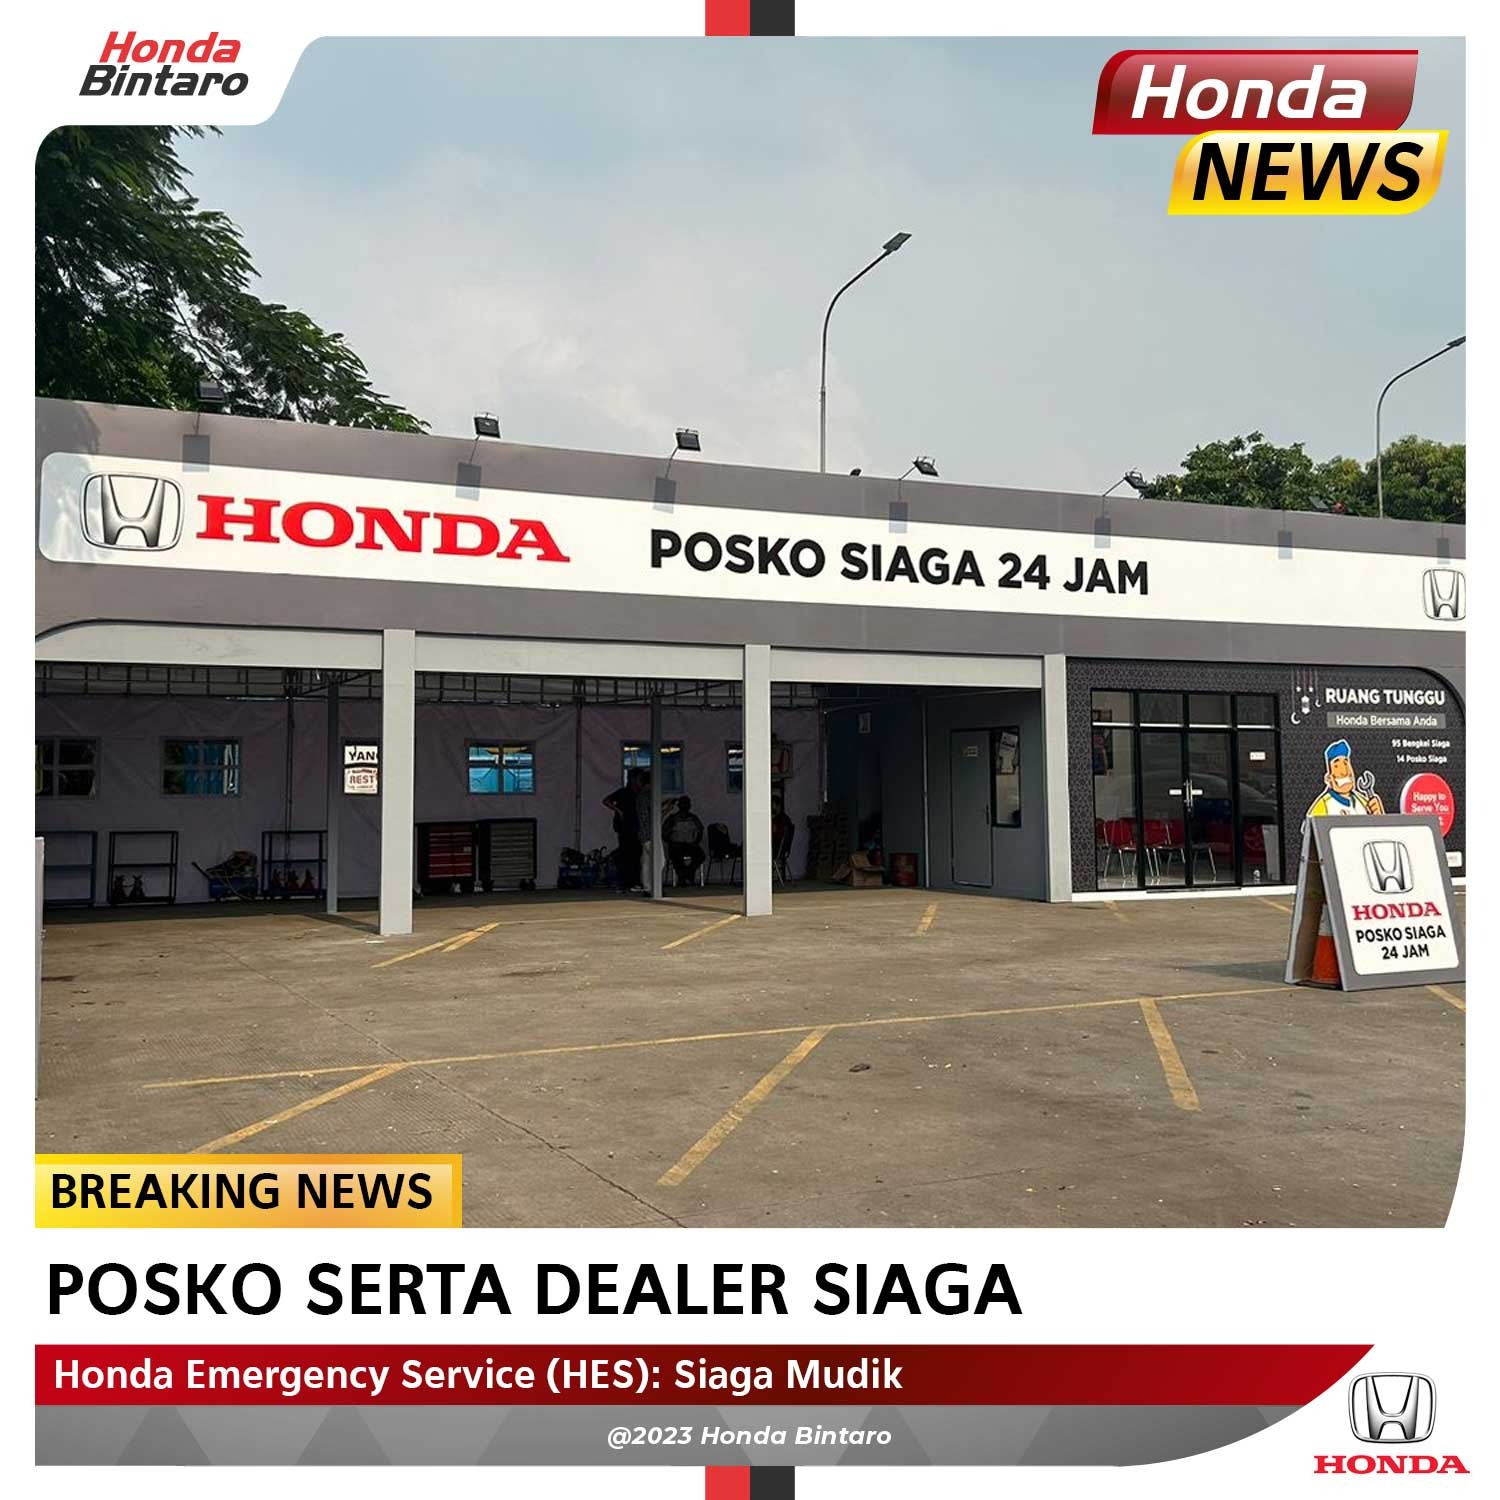 Honda Emergency Service (HES): Siaga Mudik